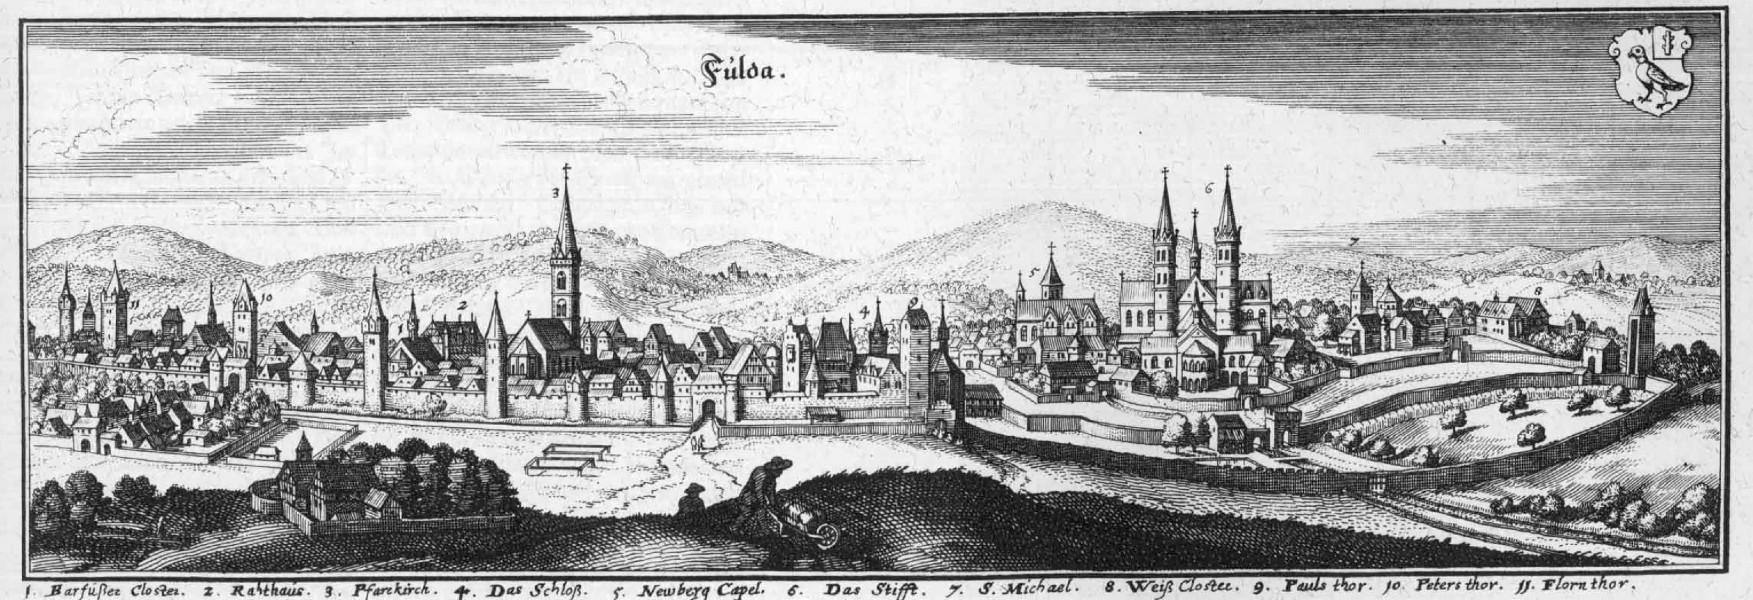 Fulda (Merian)